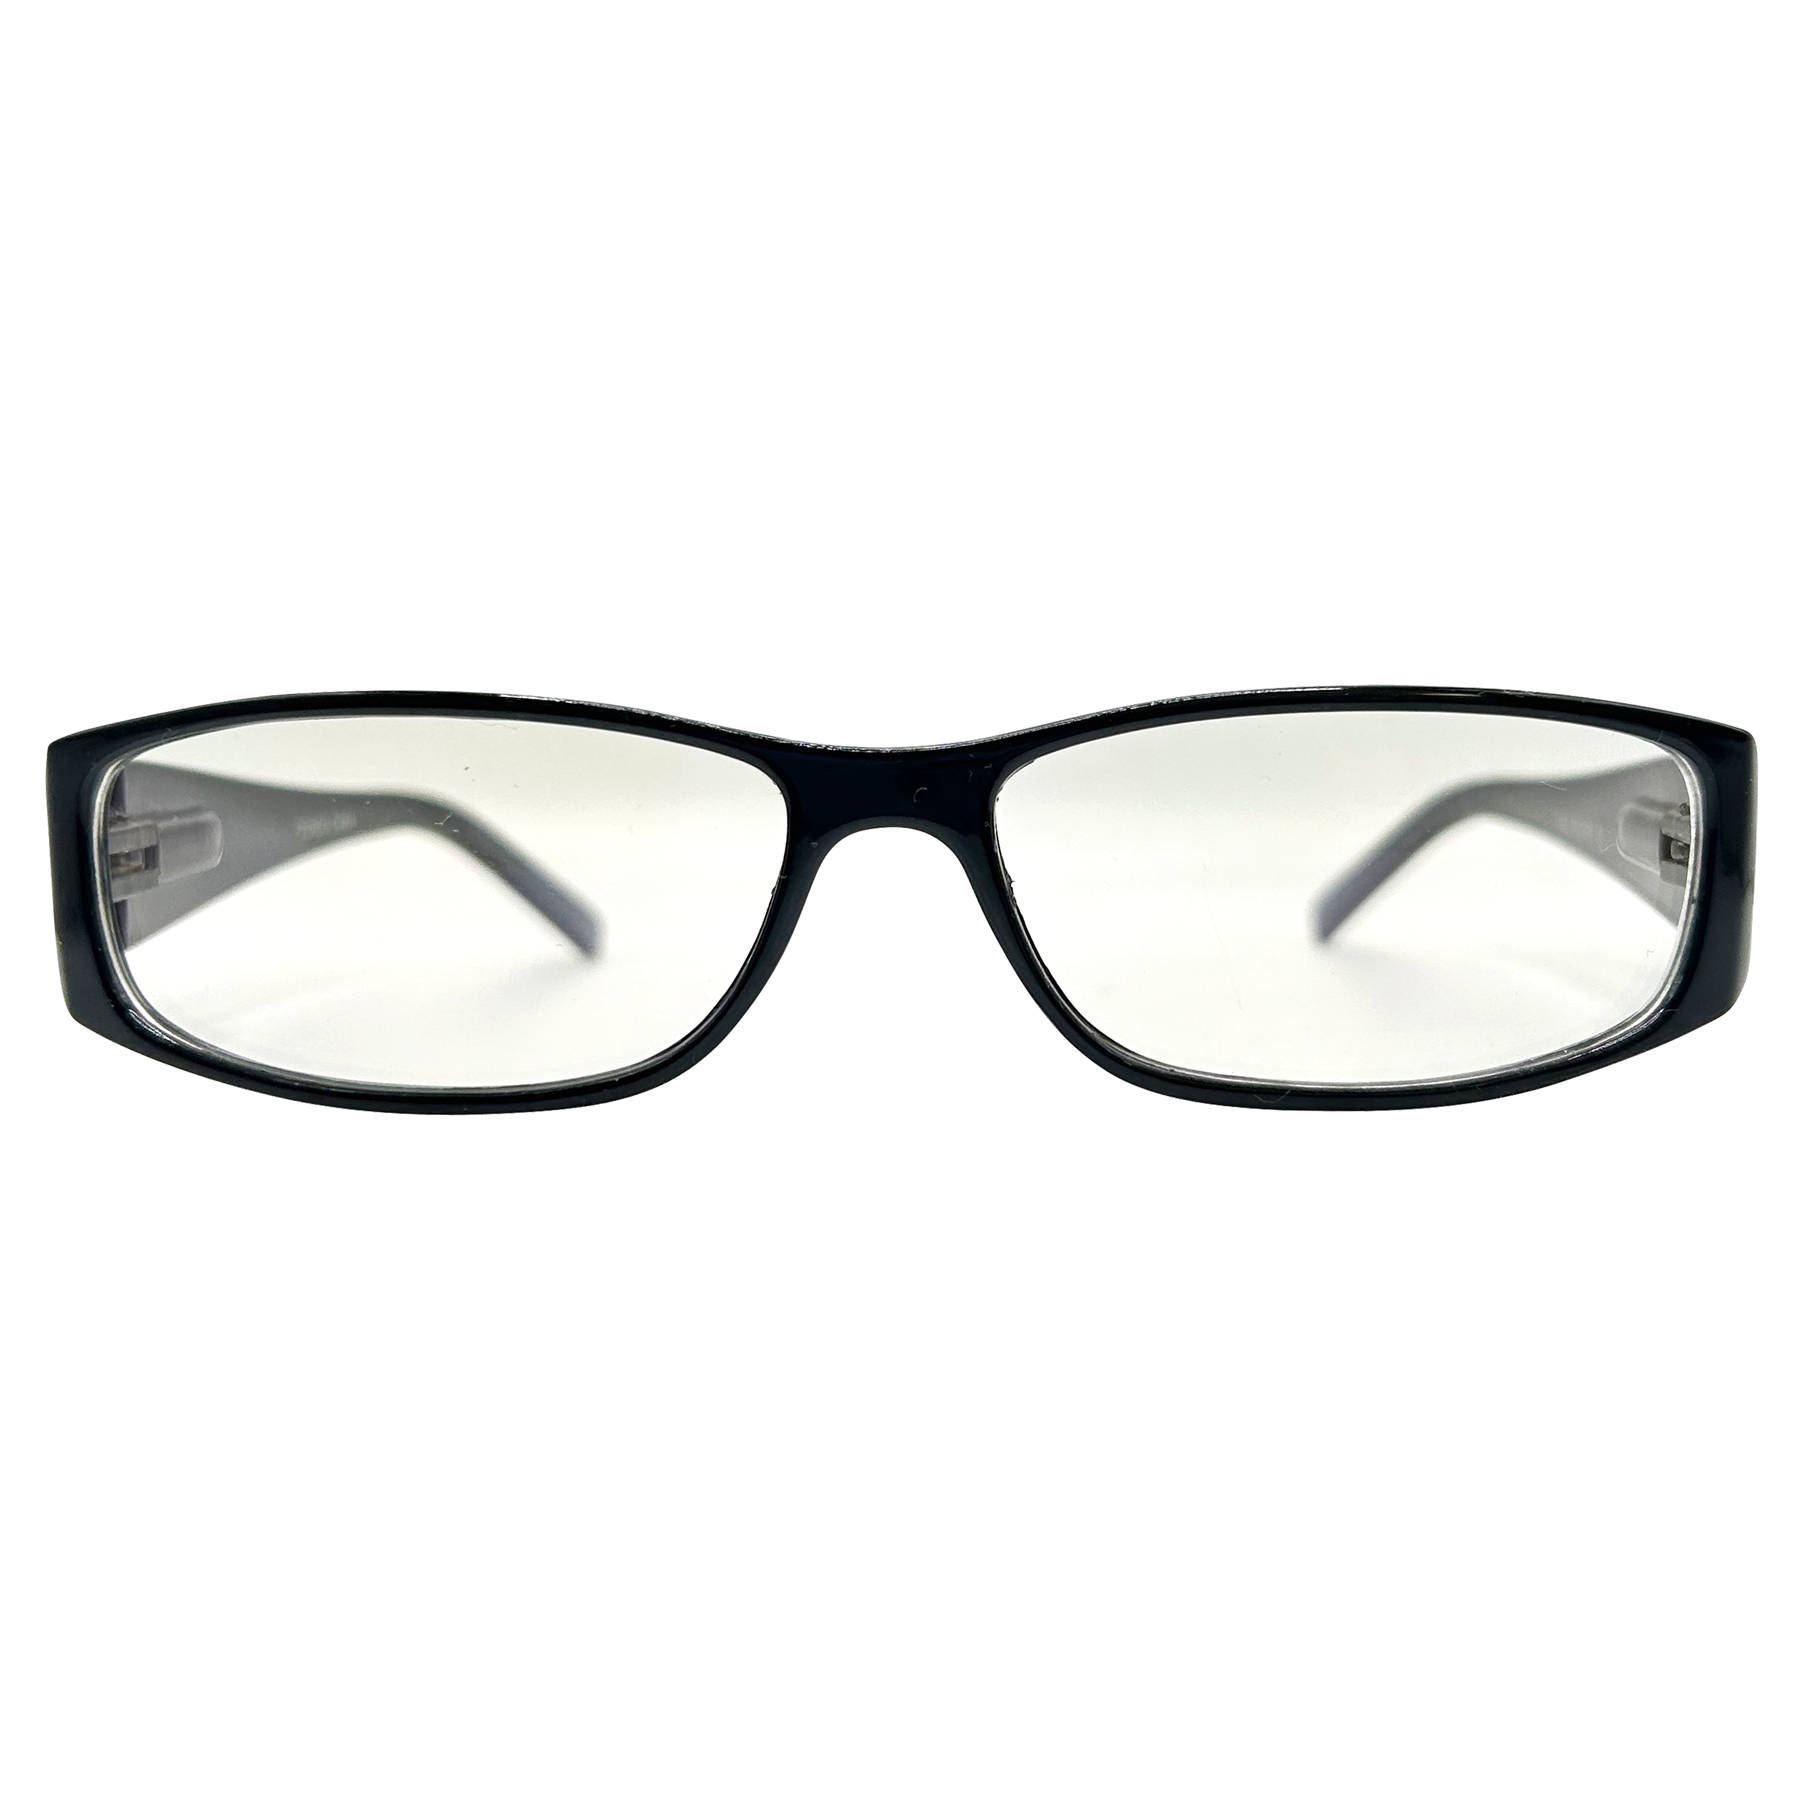 LATER GATOR Bayonetta-Style Clear Glasses